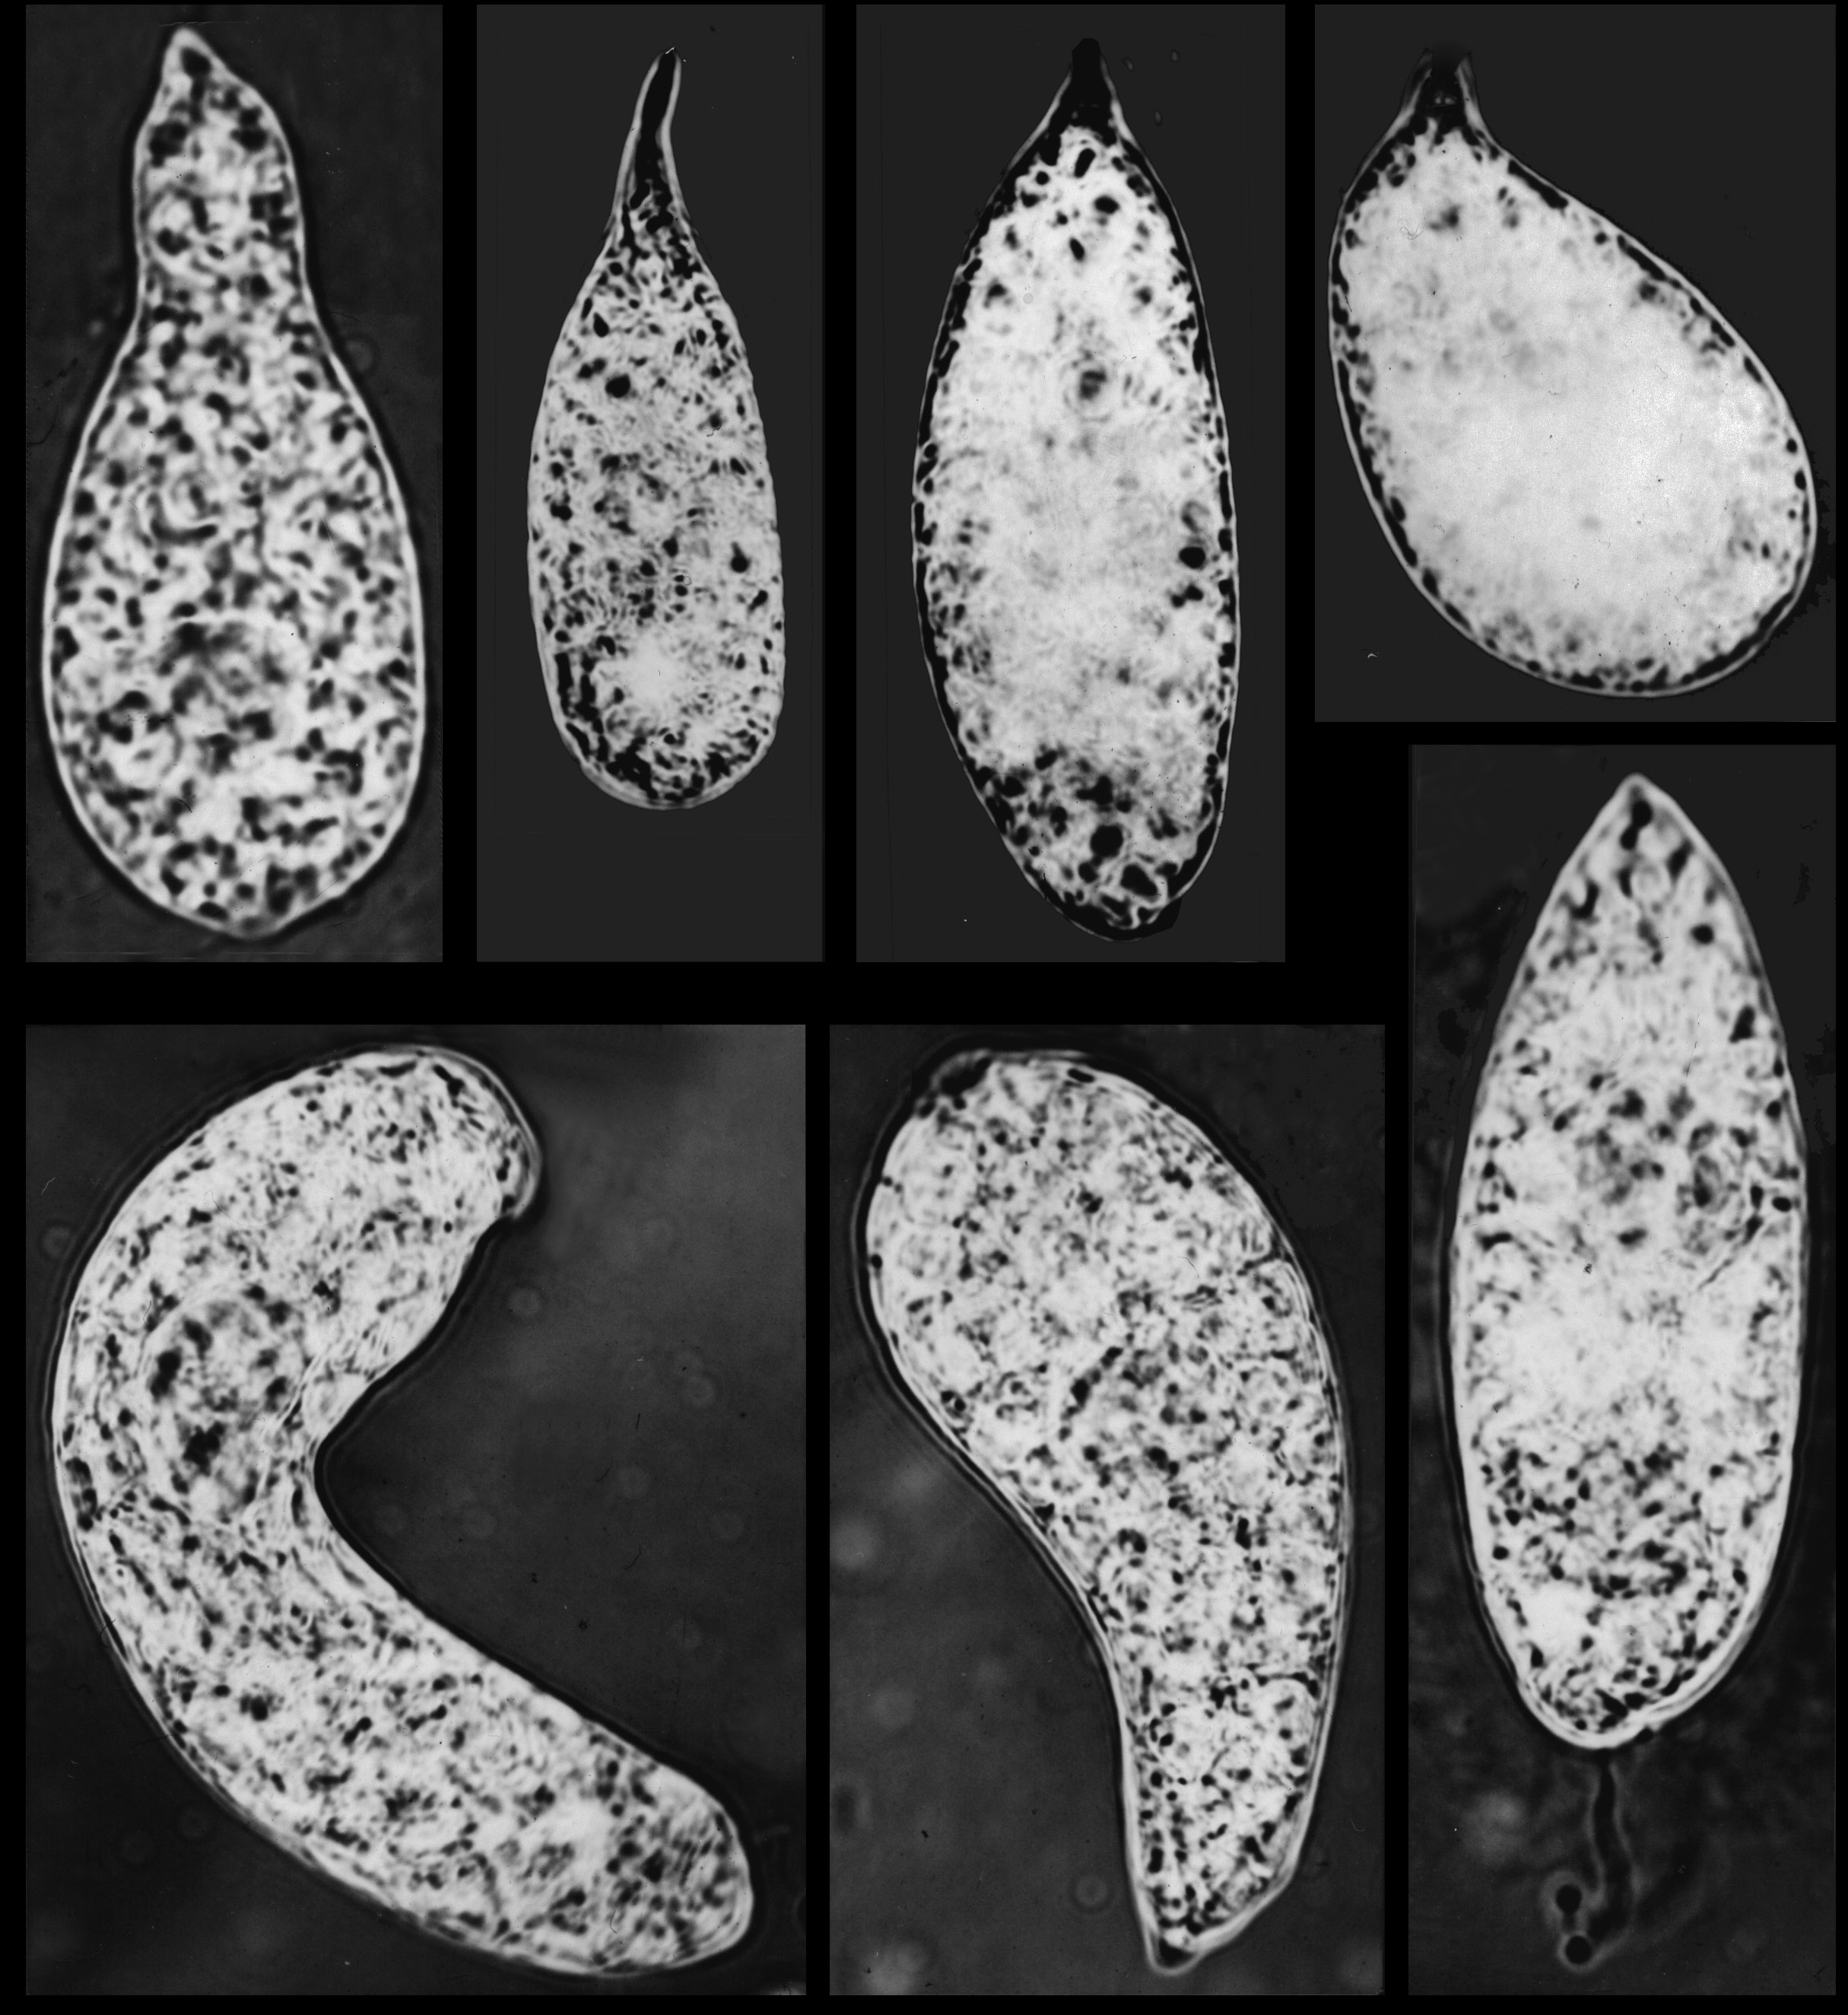 K. Wołowski: Studies on euglenophytes (S Poland) 103 1 2 5 3 4 6 7 Plate VII. 1 2. Euglena obtusa Schmitz; 3.